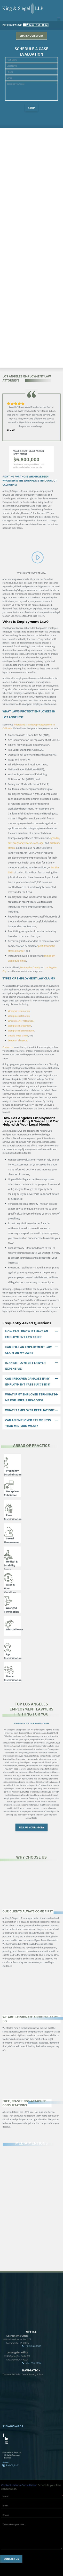 King & Siegel LLP - Los Angeles CA Lawyers